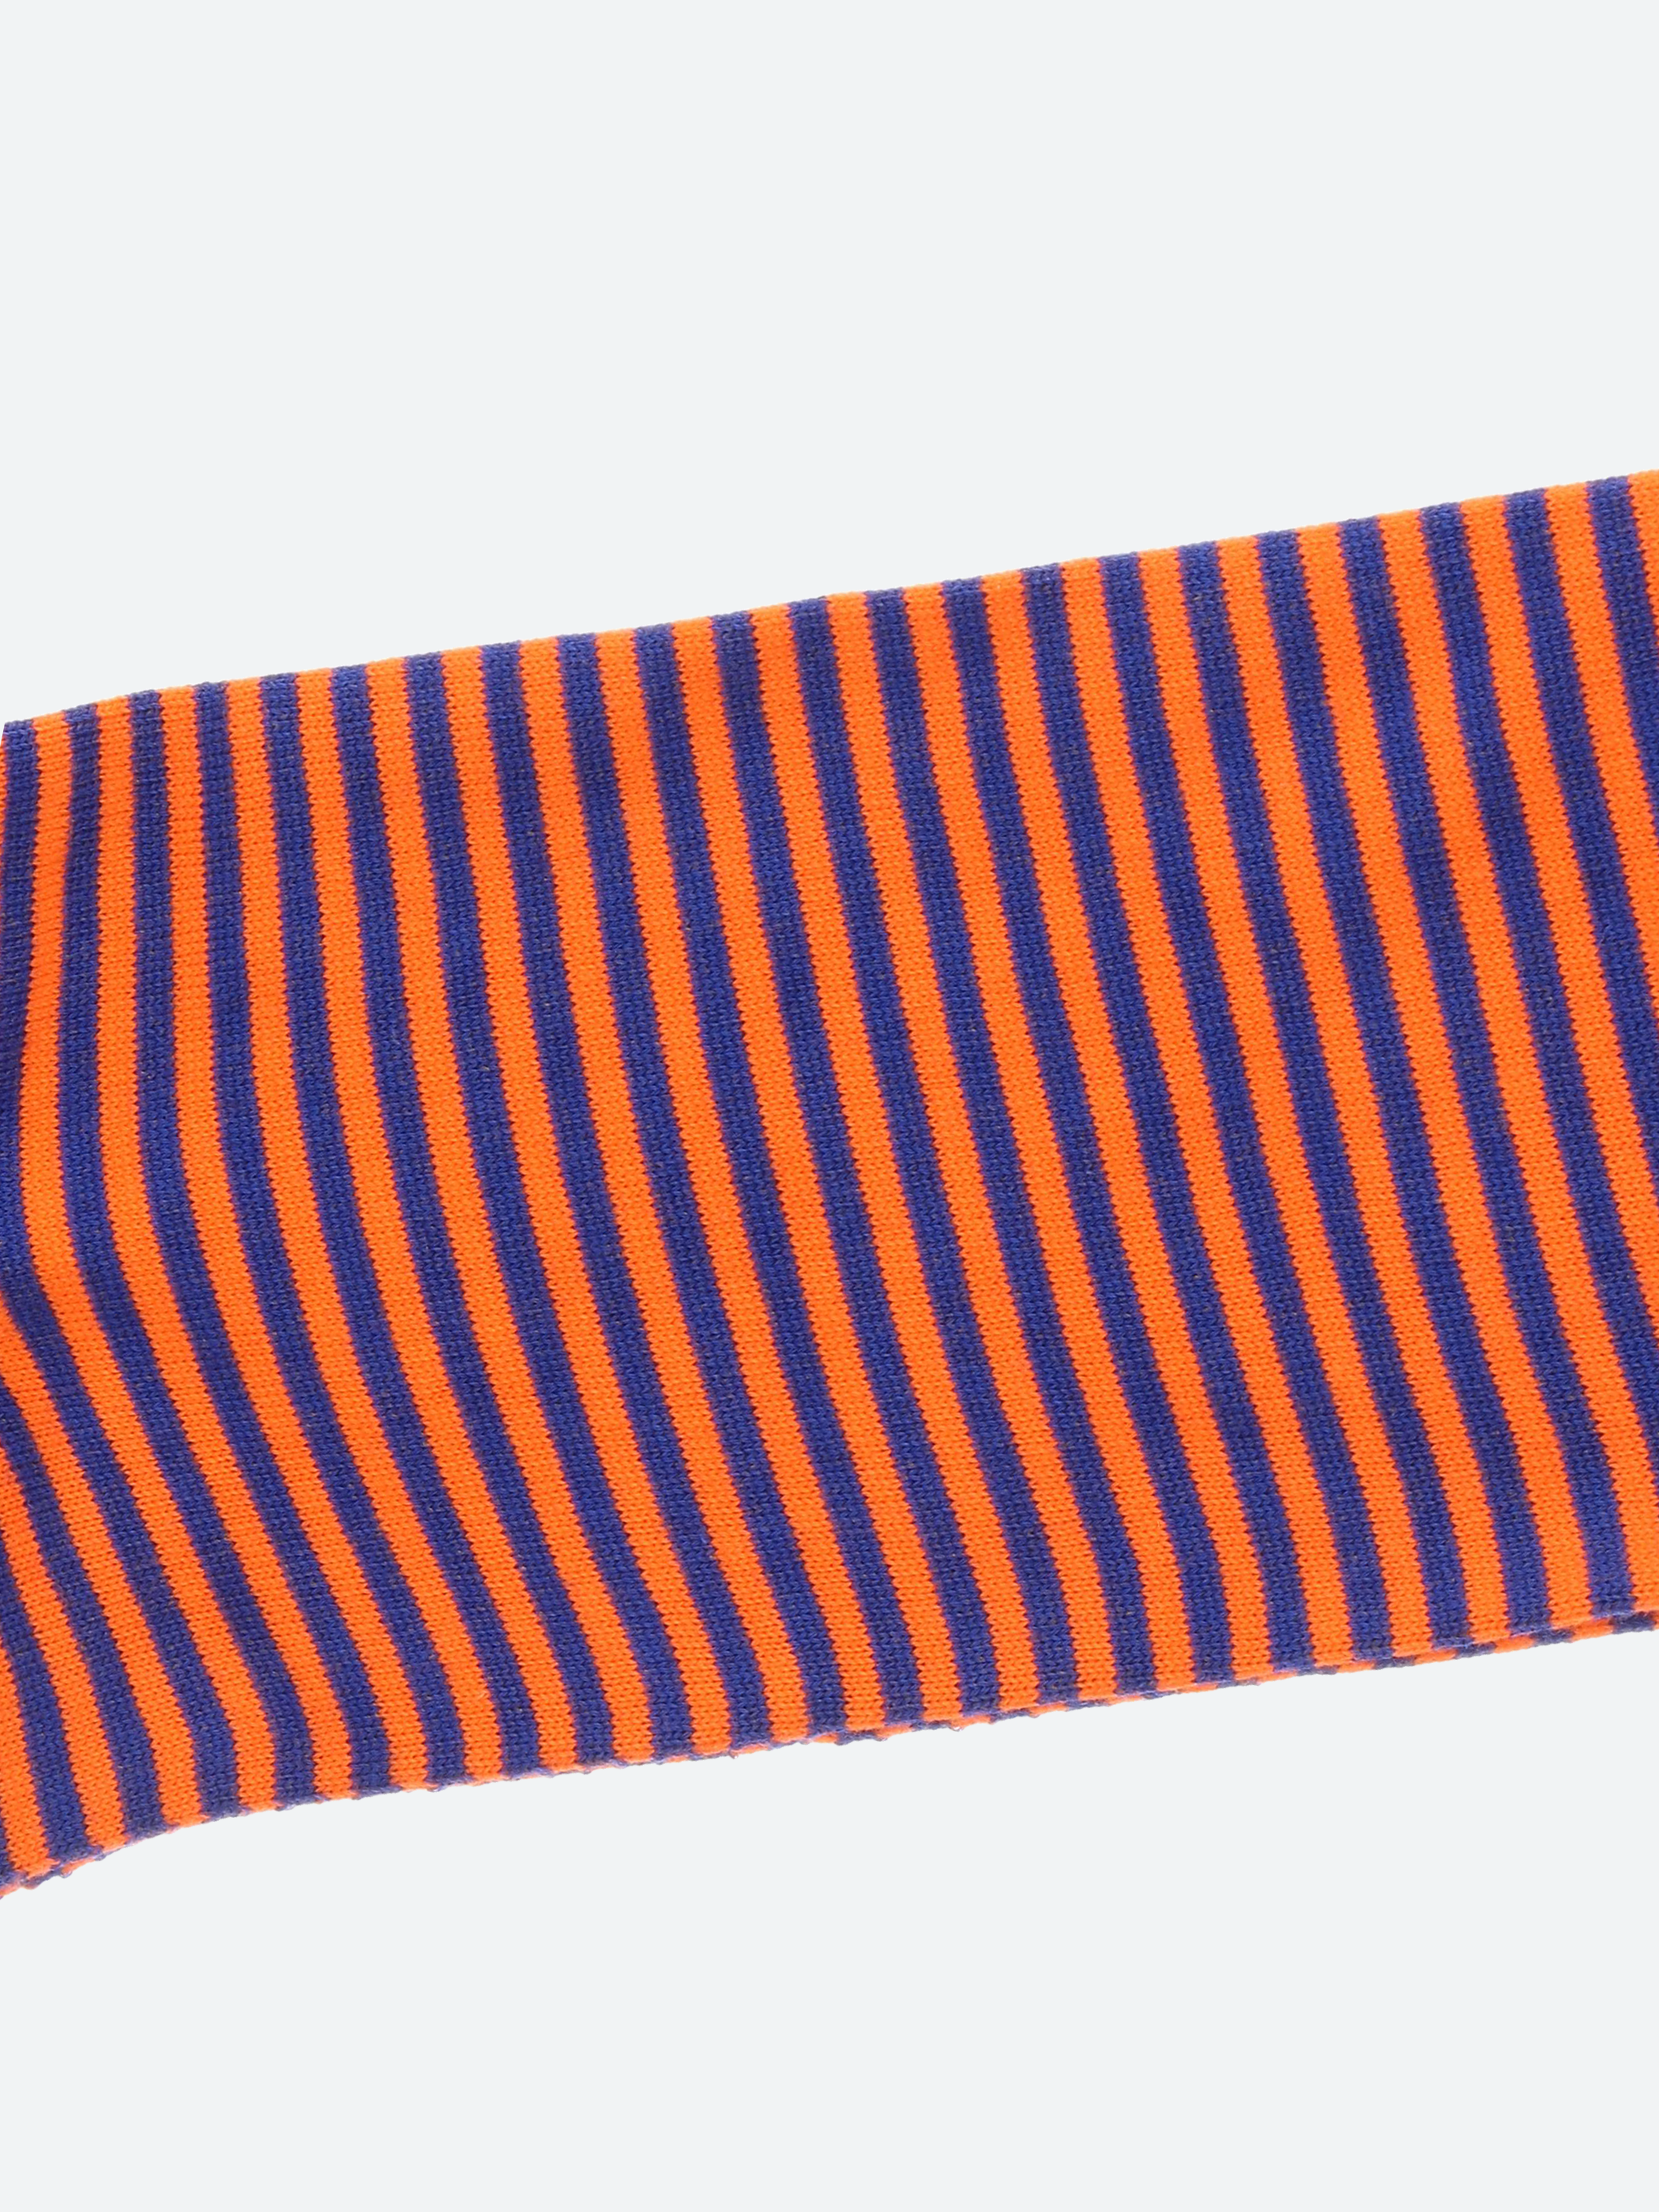 Palio Stripe Sock